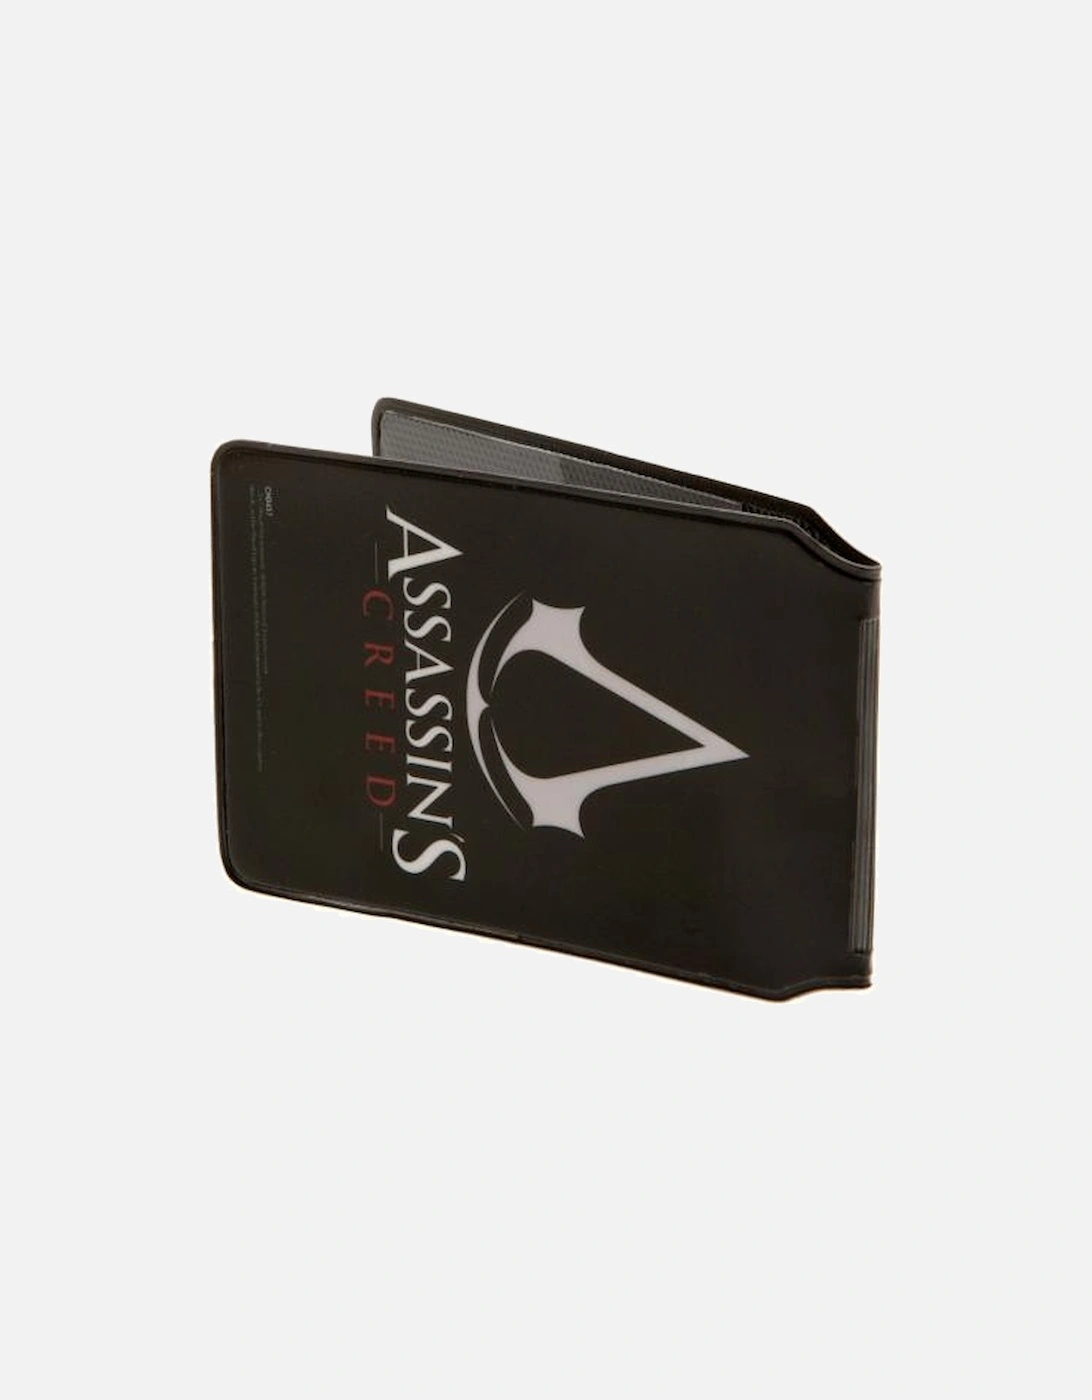 Assassins Creed Card Holder